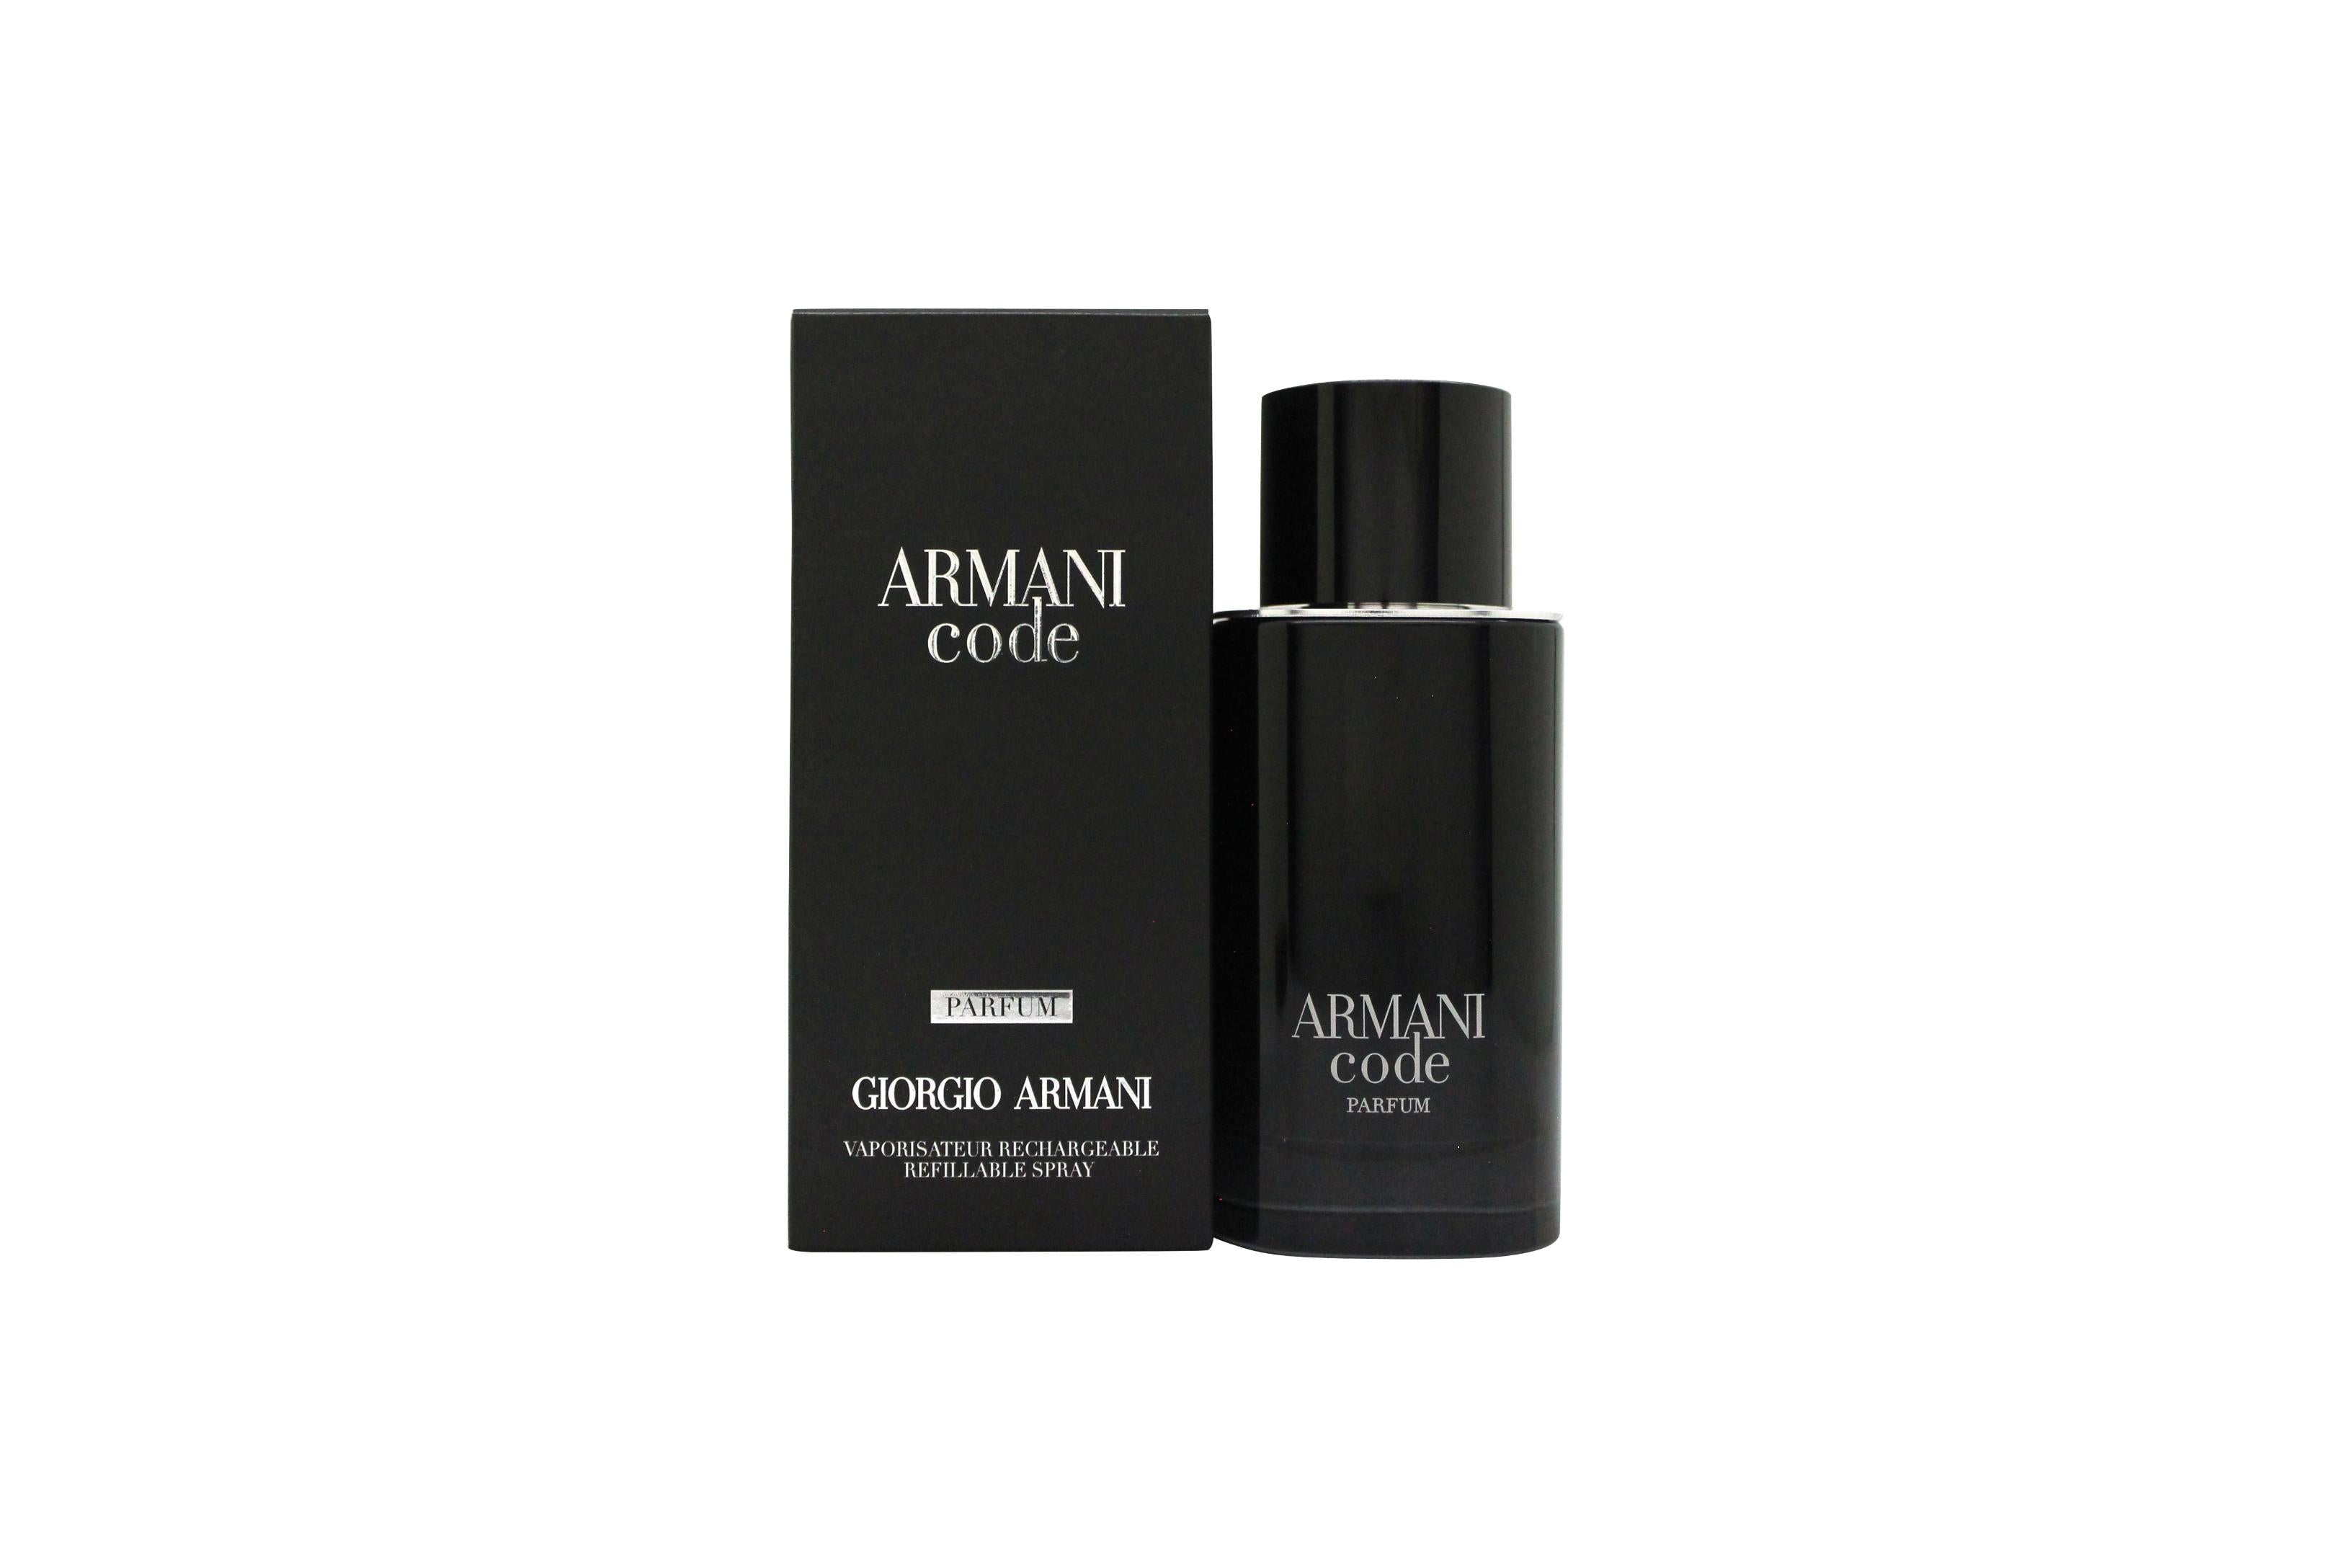 View Giorgio Armani Armani Code Parfum Eau de Parfum 75ml Spray information